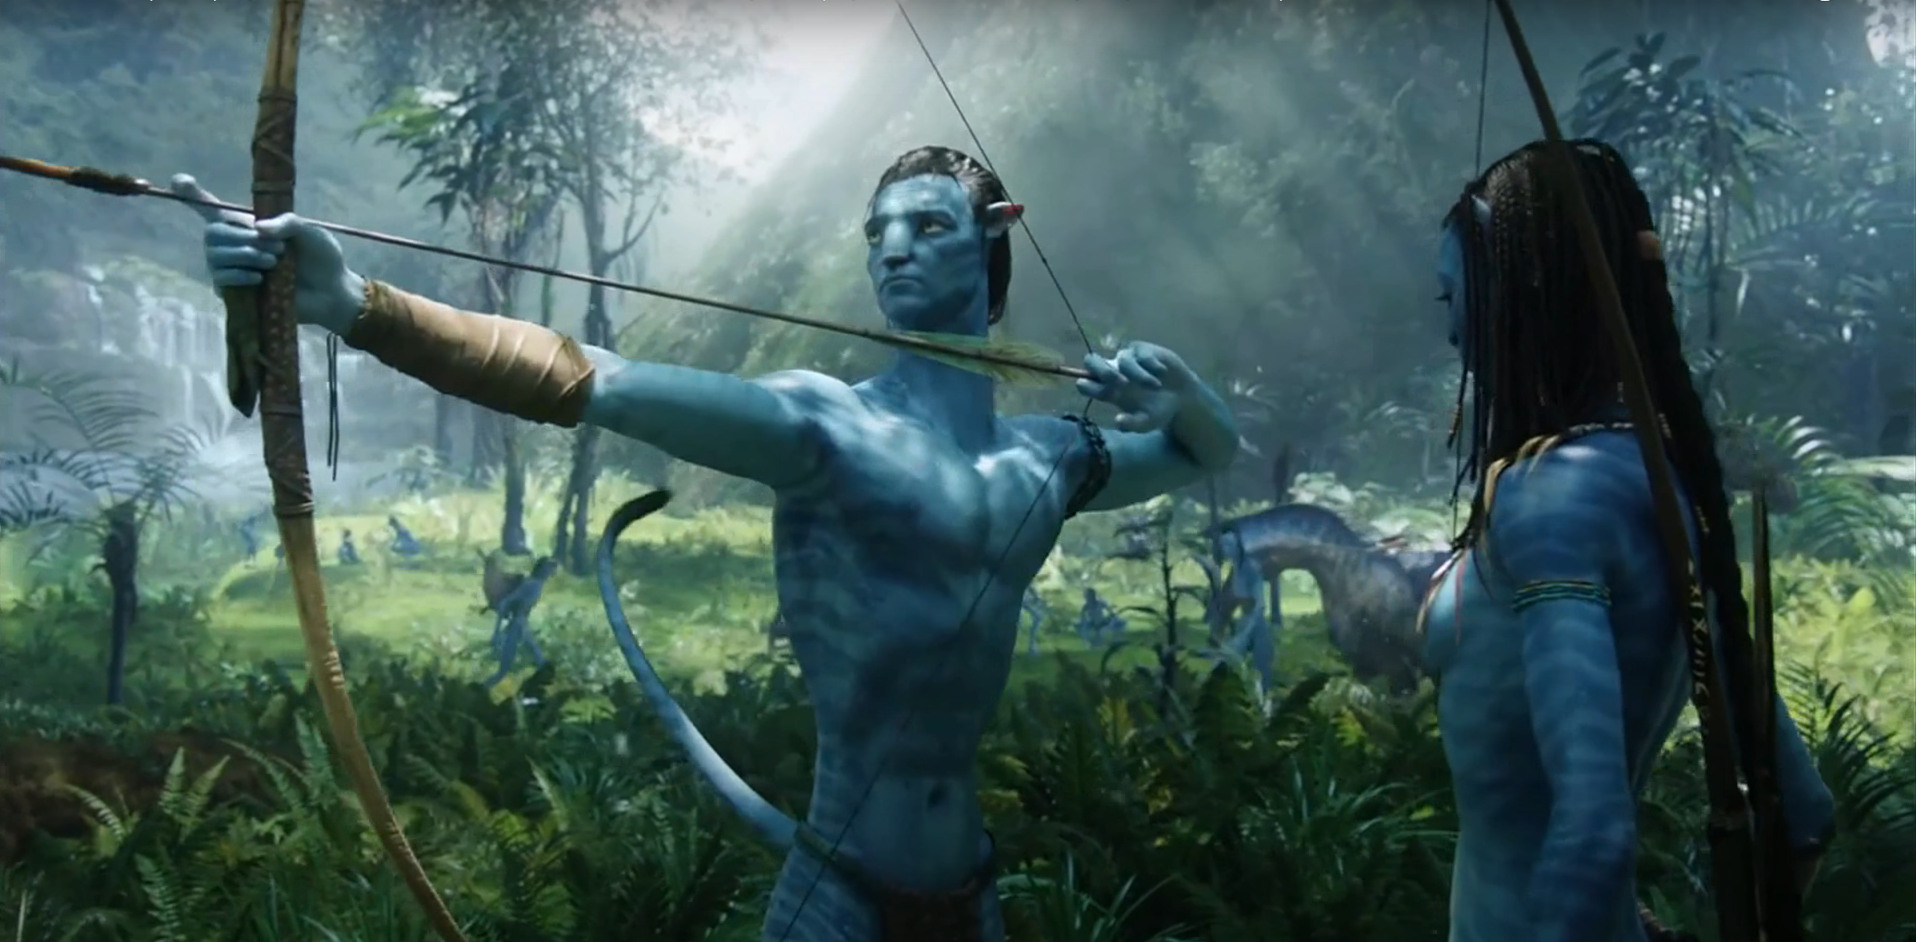 Avatar 2" movie trailer premiere date is announced